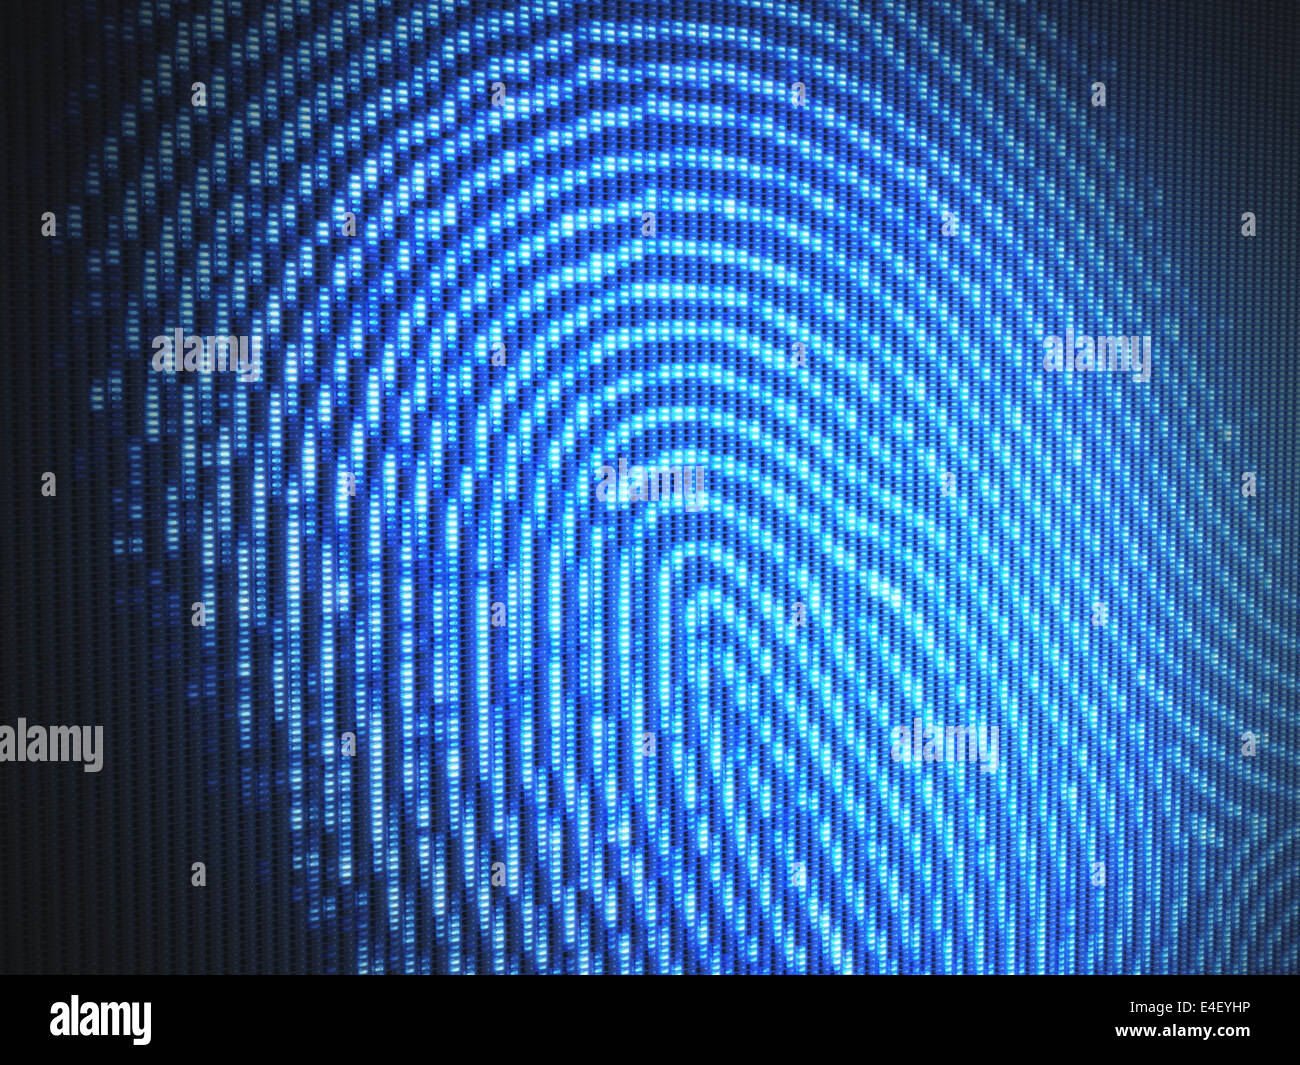 Fingerprint on a led screen. Concept of technology. Stock Photo